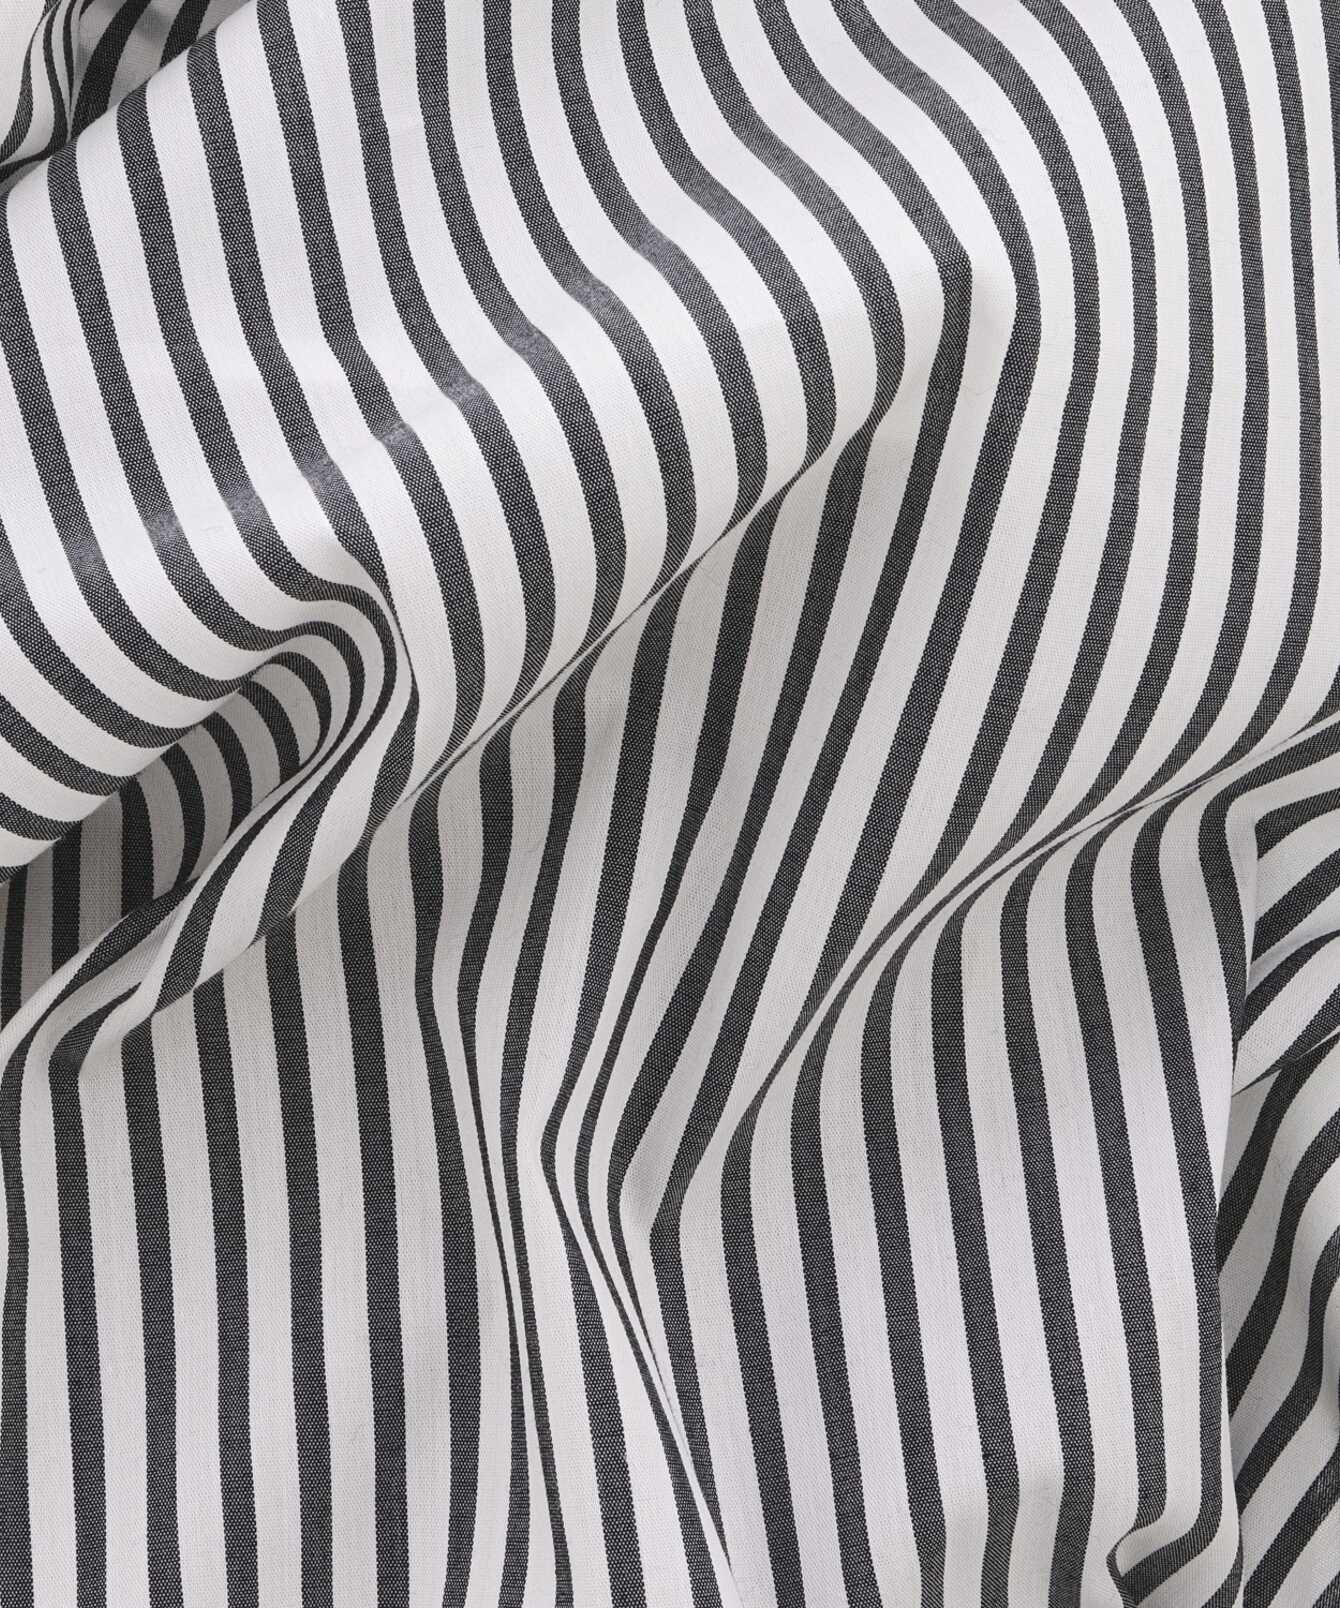 Skjorta Eloise Striped Svart Vit Randig Skjorta The Shirt Factory